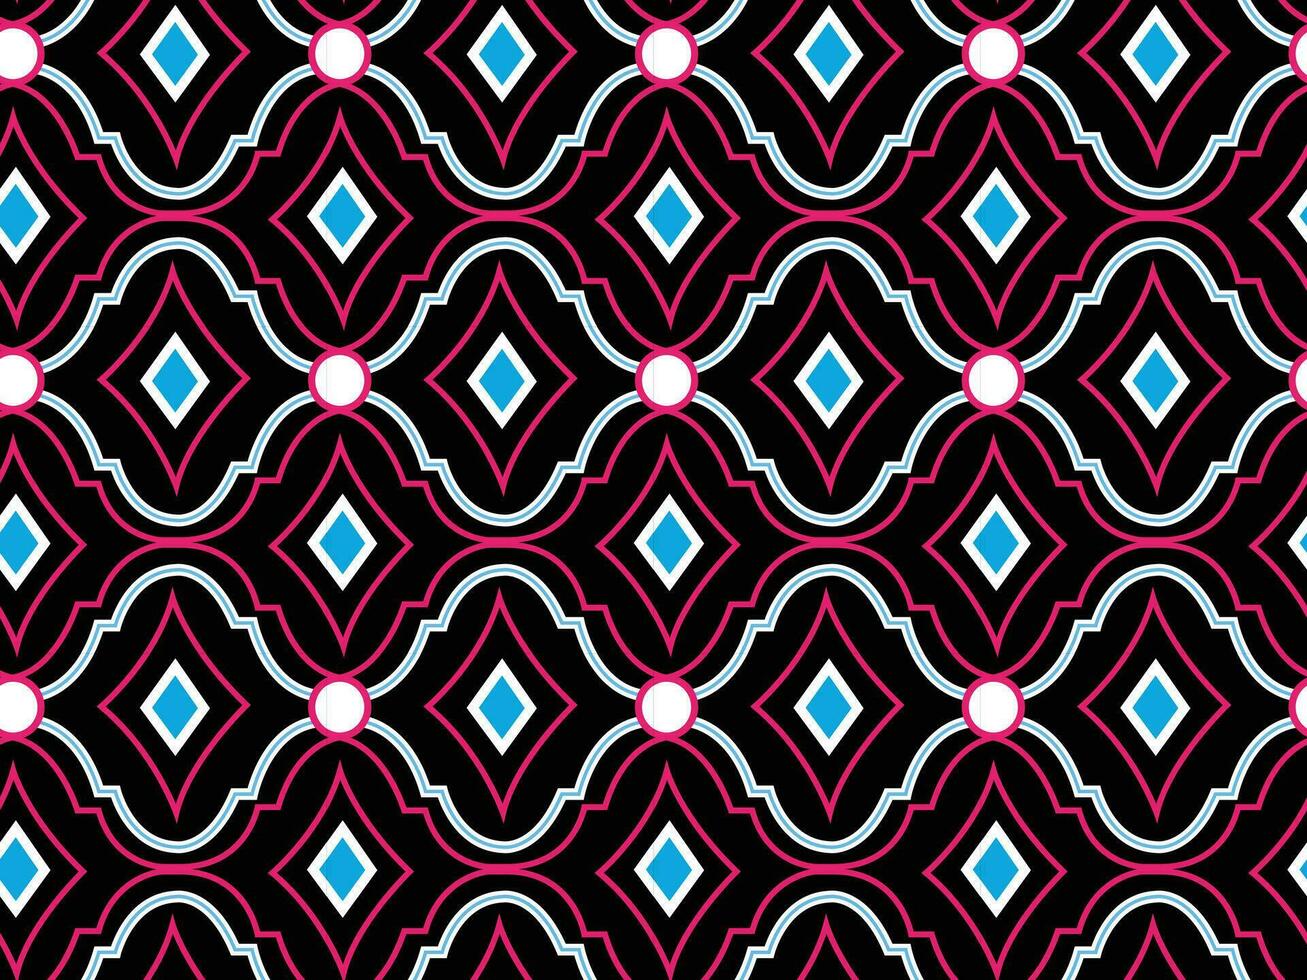 desatado abstrato geométrico padrão, têxtil textura azulejos. vetor